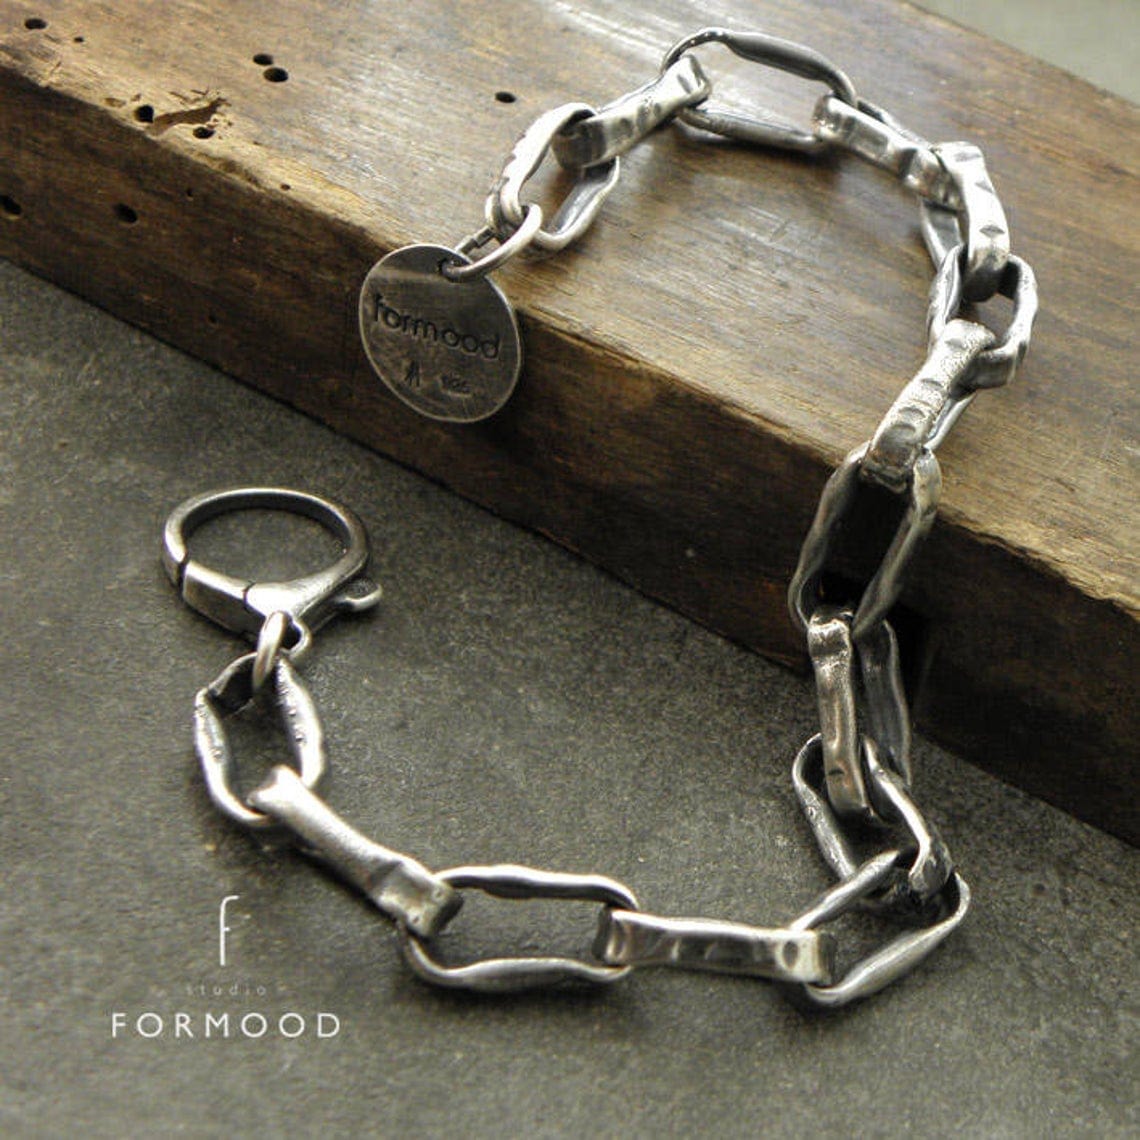 Statement Sterling Silver Chain Bracelet & Necklace Bundle FORMOOD